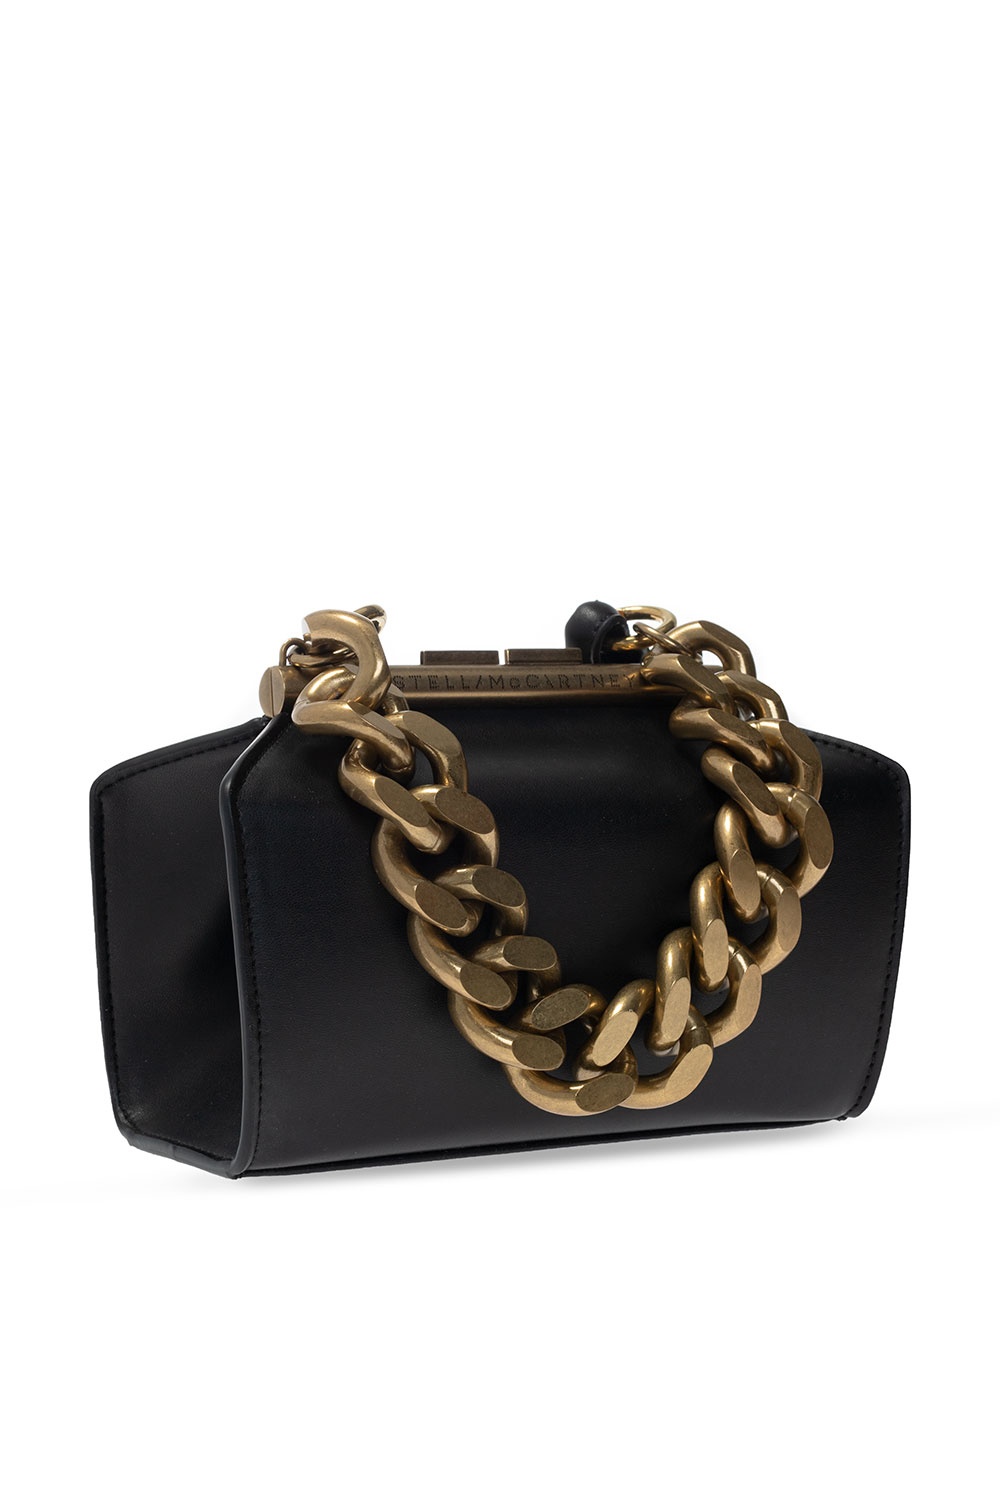 Stella McCartney 'Chunky Chain' shoulder bag | Women's Bags 